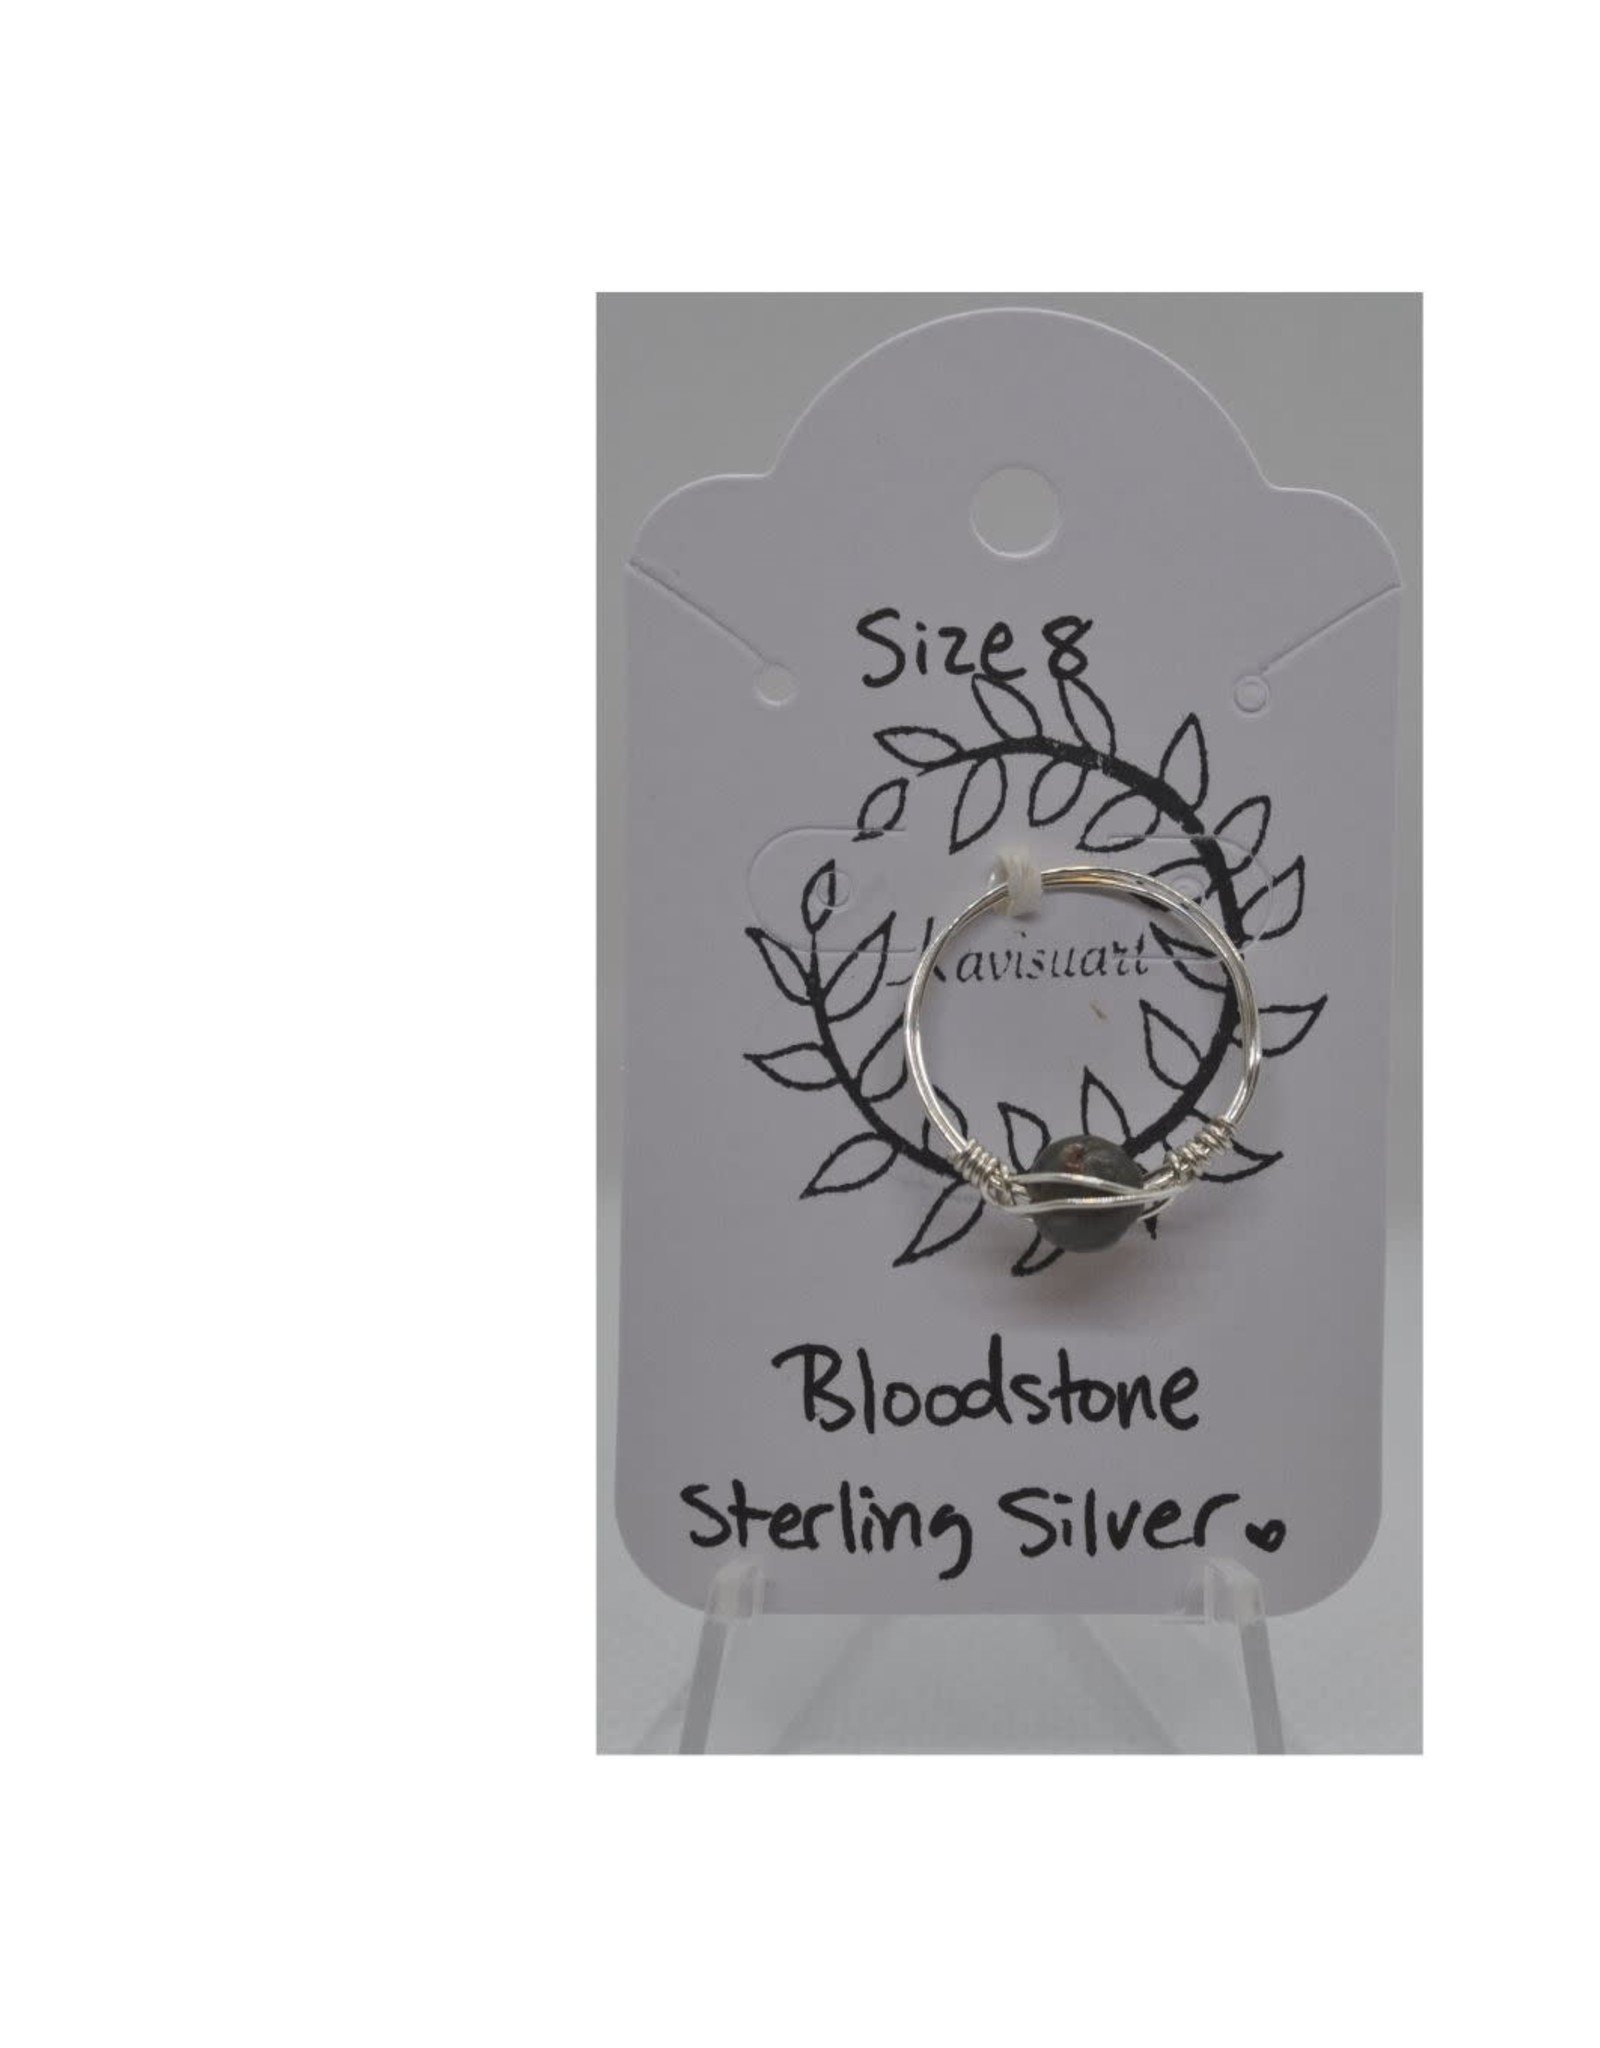 Kavisuart Bloodstone Sterling Silver Ring - size 8